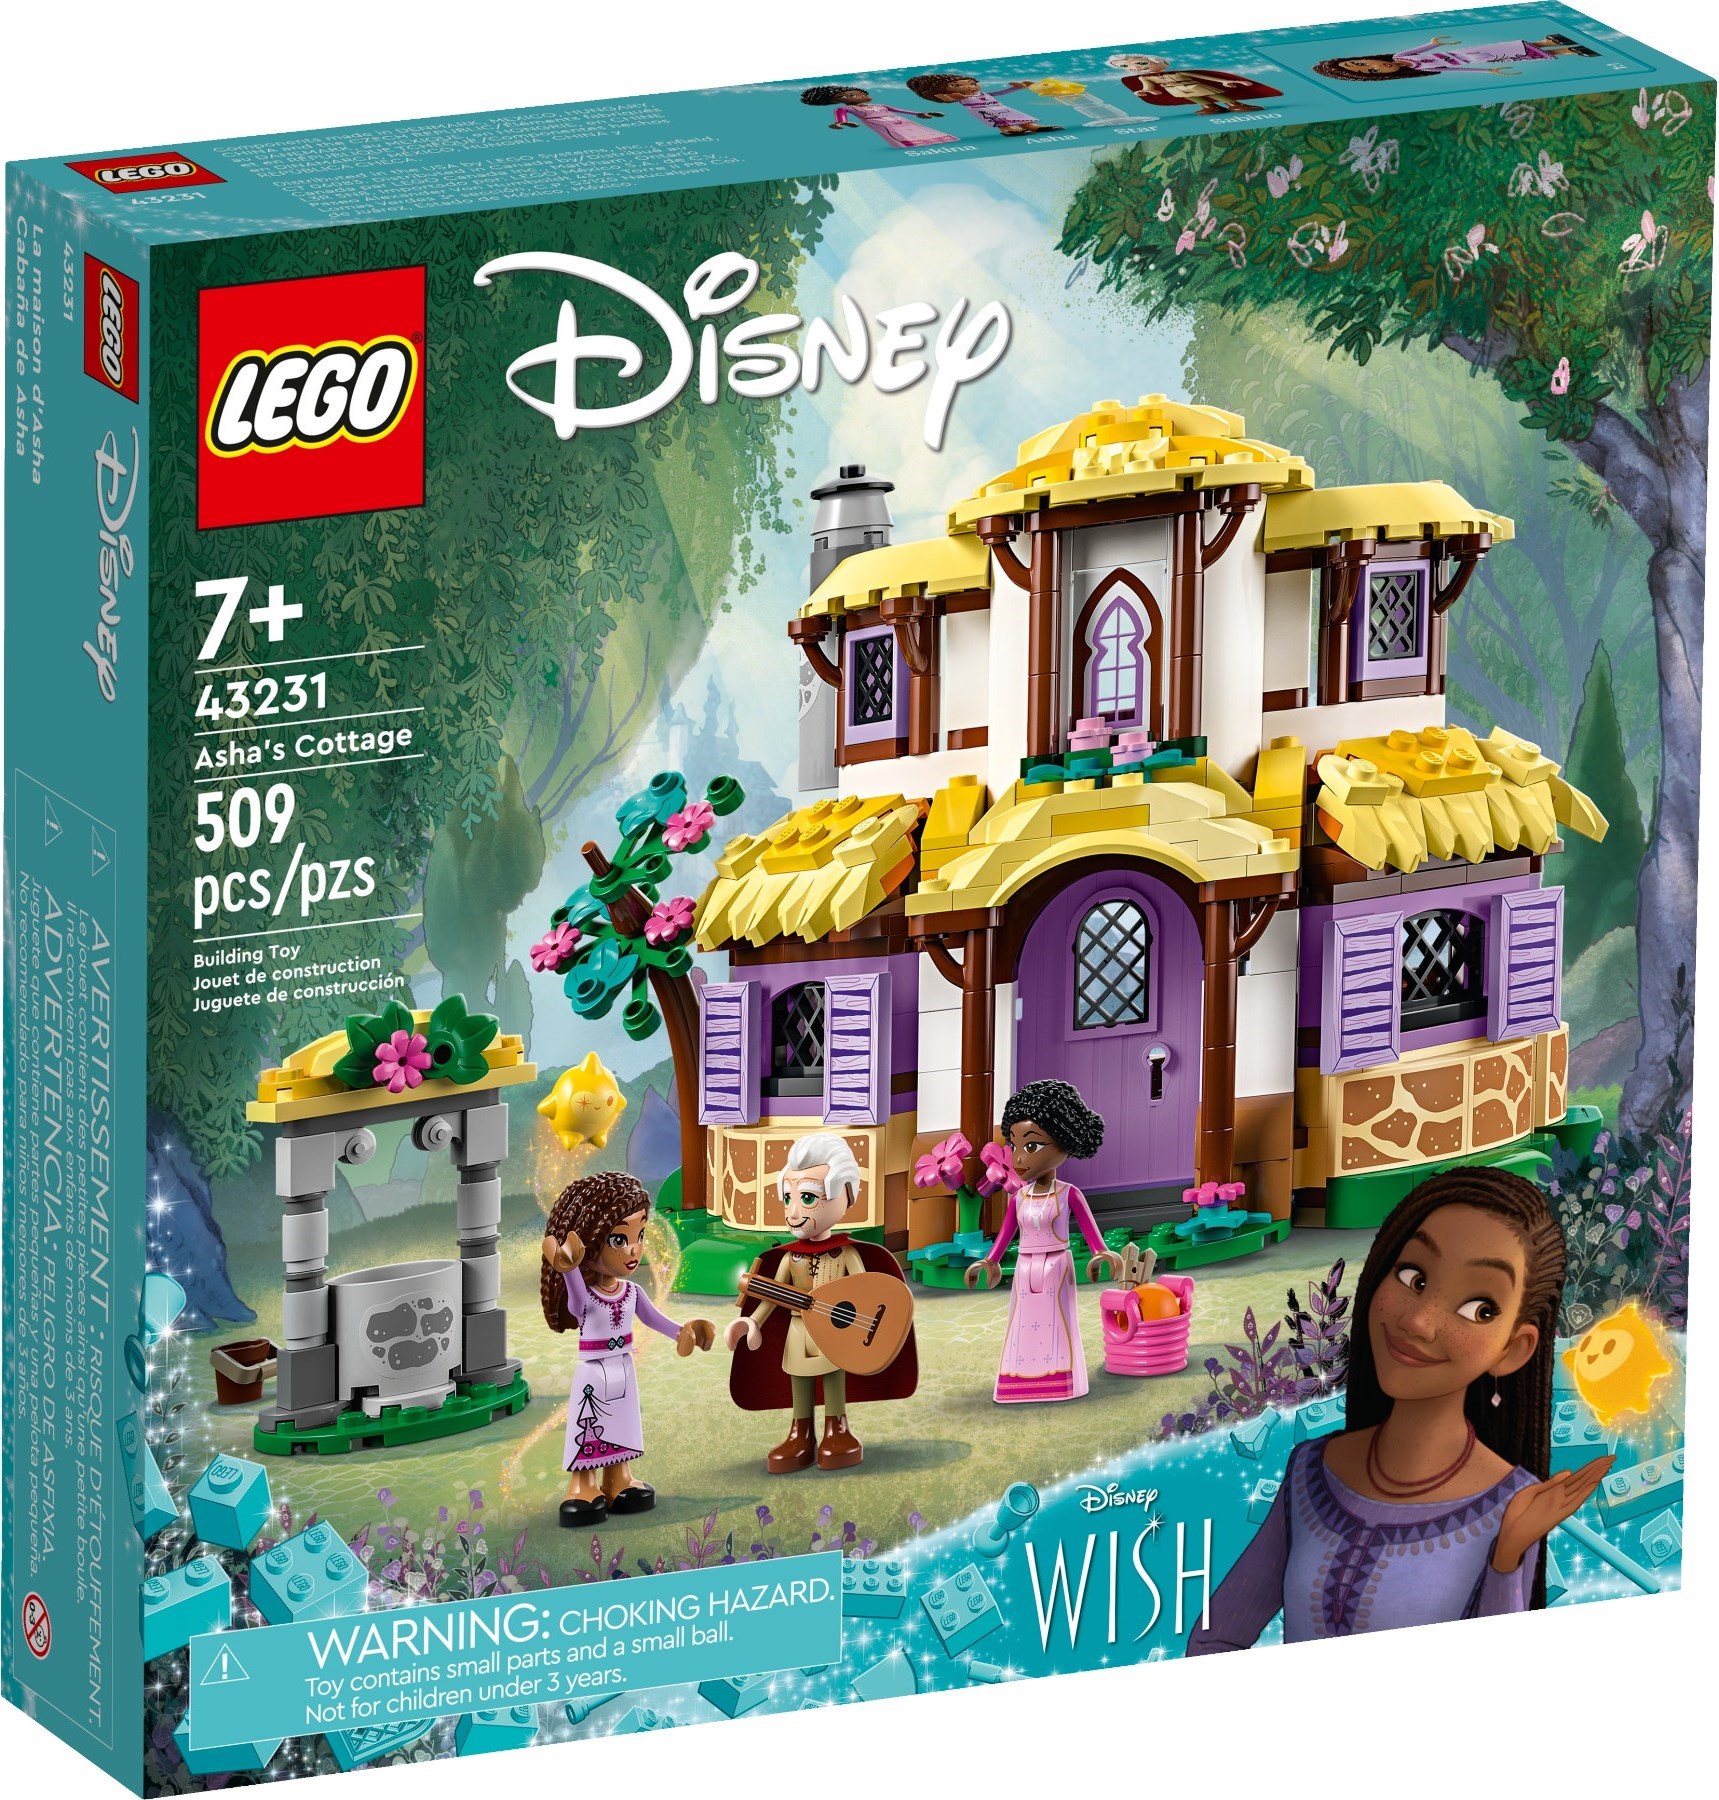 LEGO® Disney 100 Years Celebration Display Case (40600) – Kingdom